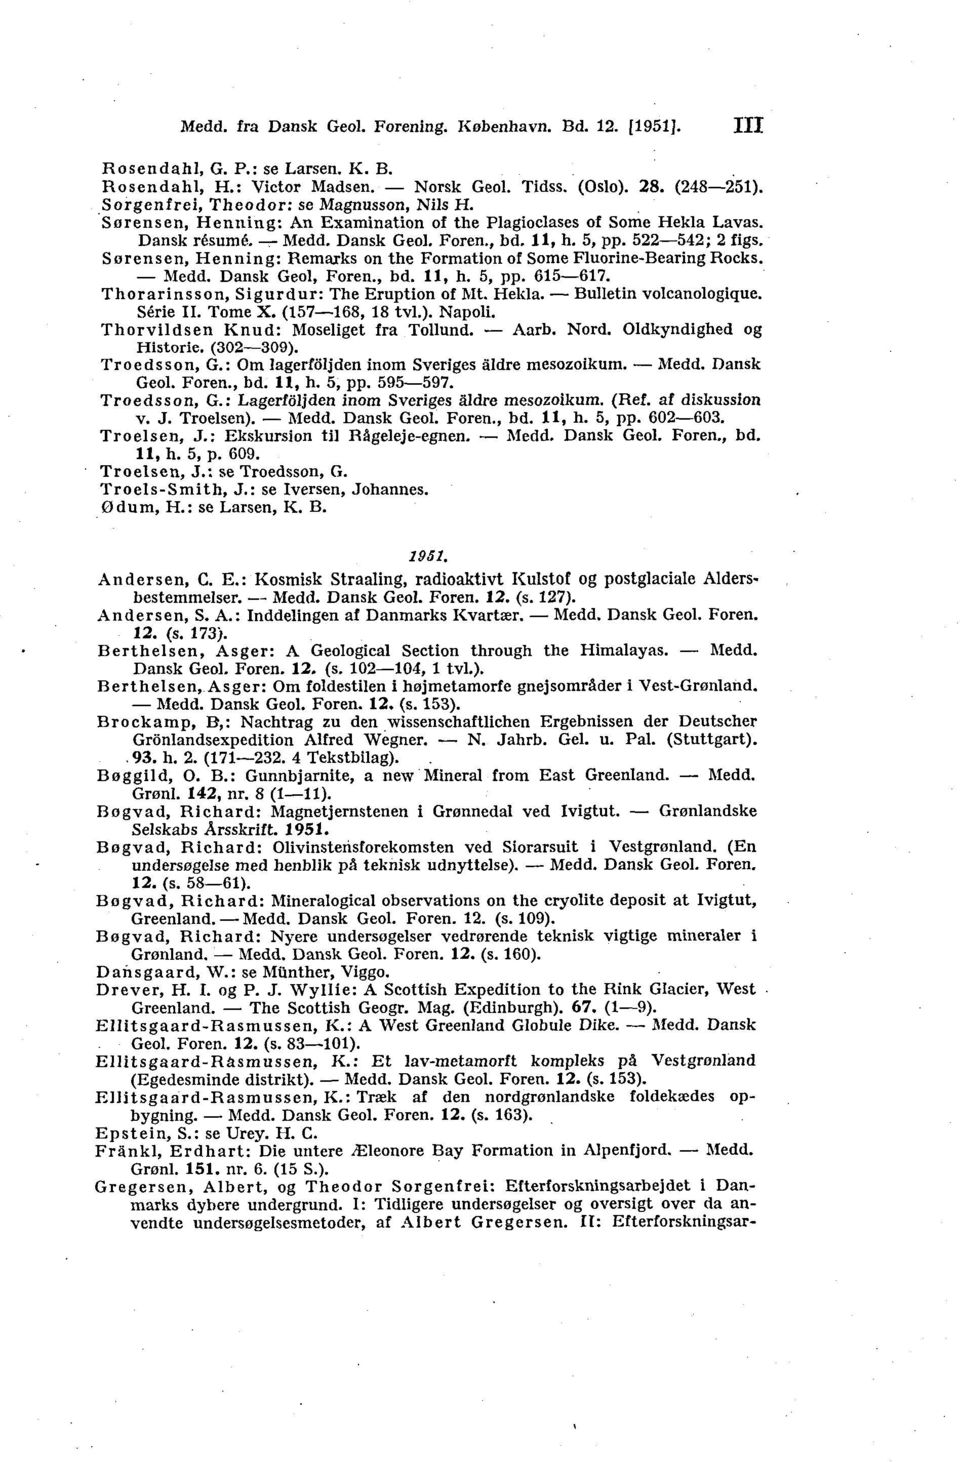 Sørensen, Henning: Remarks on the Formation of Some Fluorine-Bearing Rocks. Medd. Dansk Geol, Foren., bd. 11, h. 5, pp. 615 617. Thorarinsson, Sigurdur: The Eruption of Mt. Hekla.